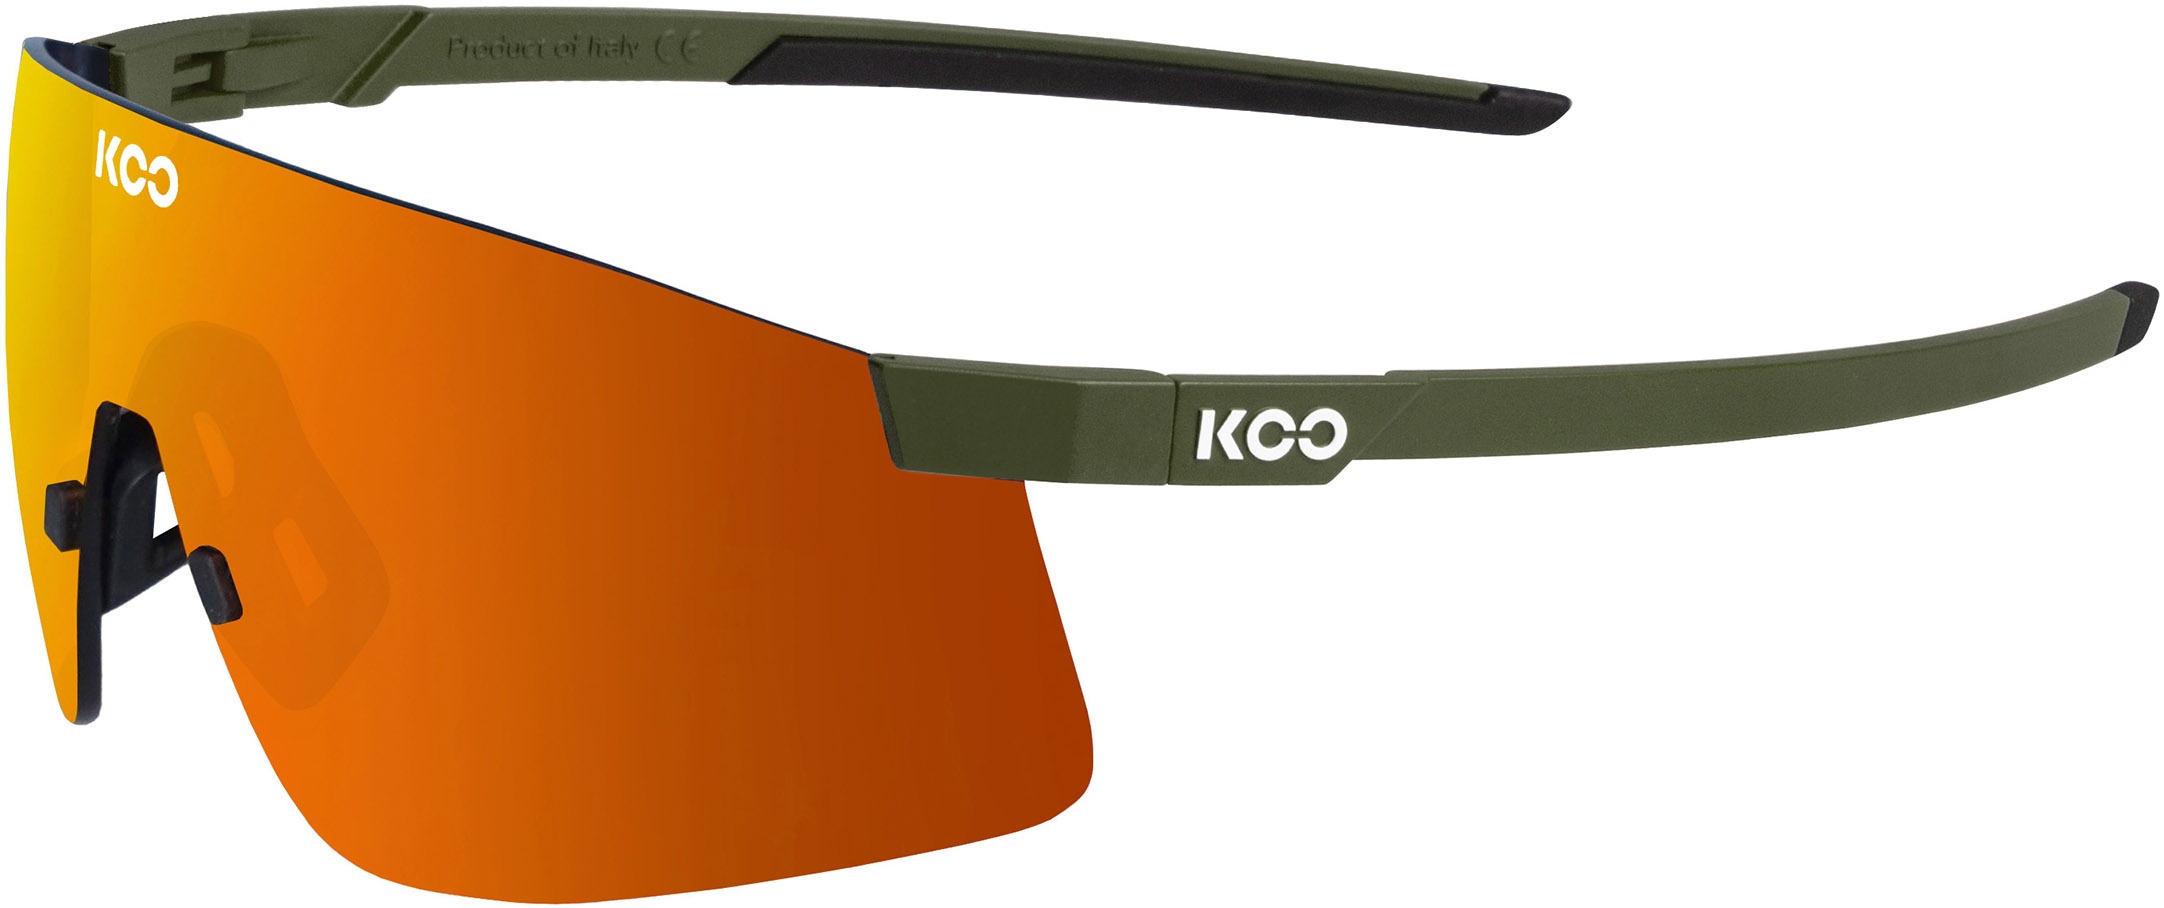  - KOO Nova Cykelbriller - Grøn/Orange